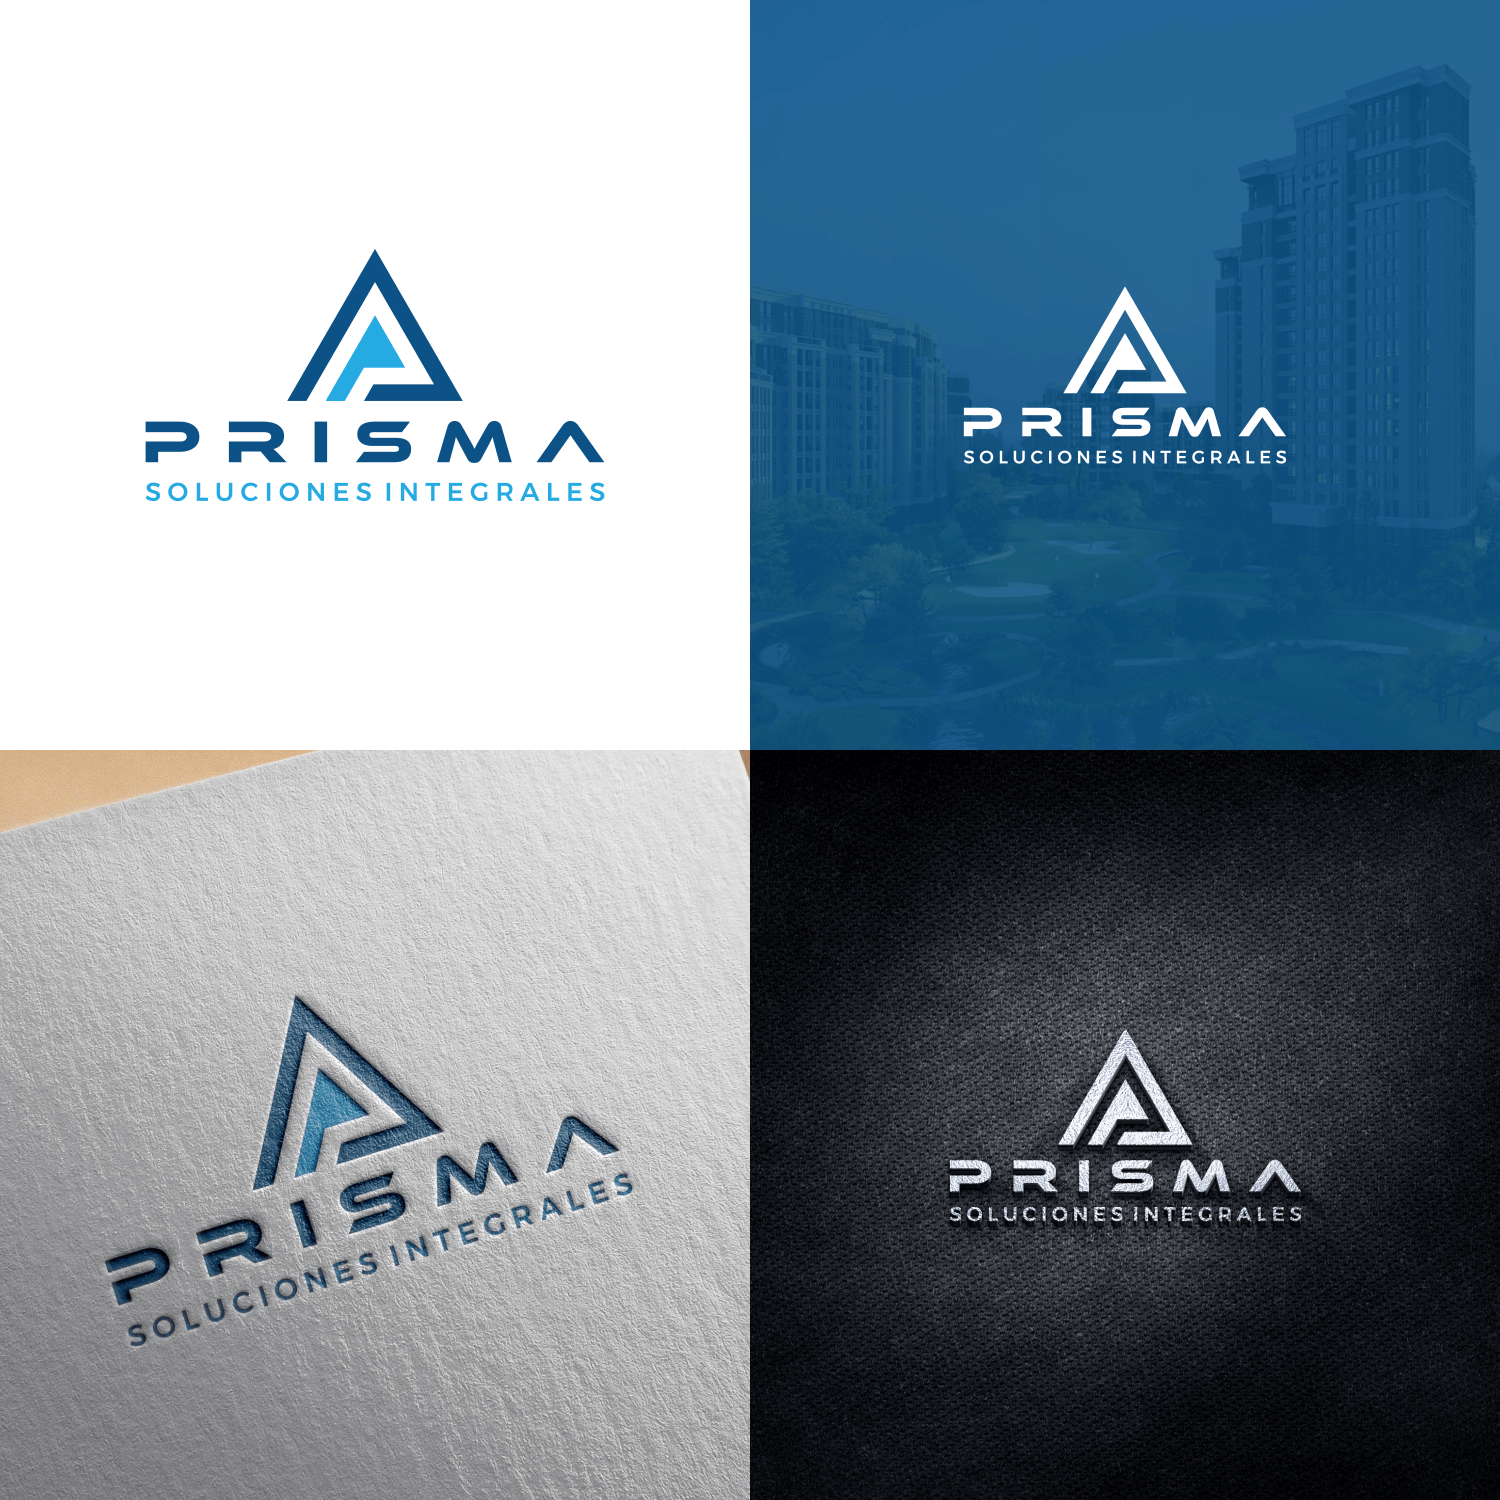 Official Business Logo - Conservative, Serious, Business Logo Design for Prisma Soluciones